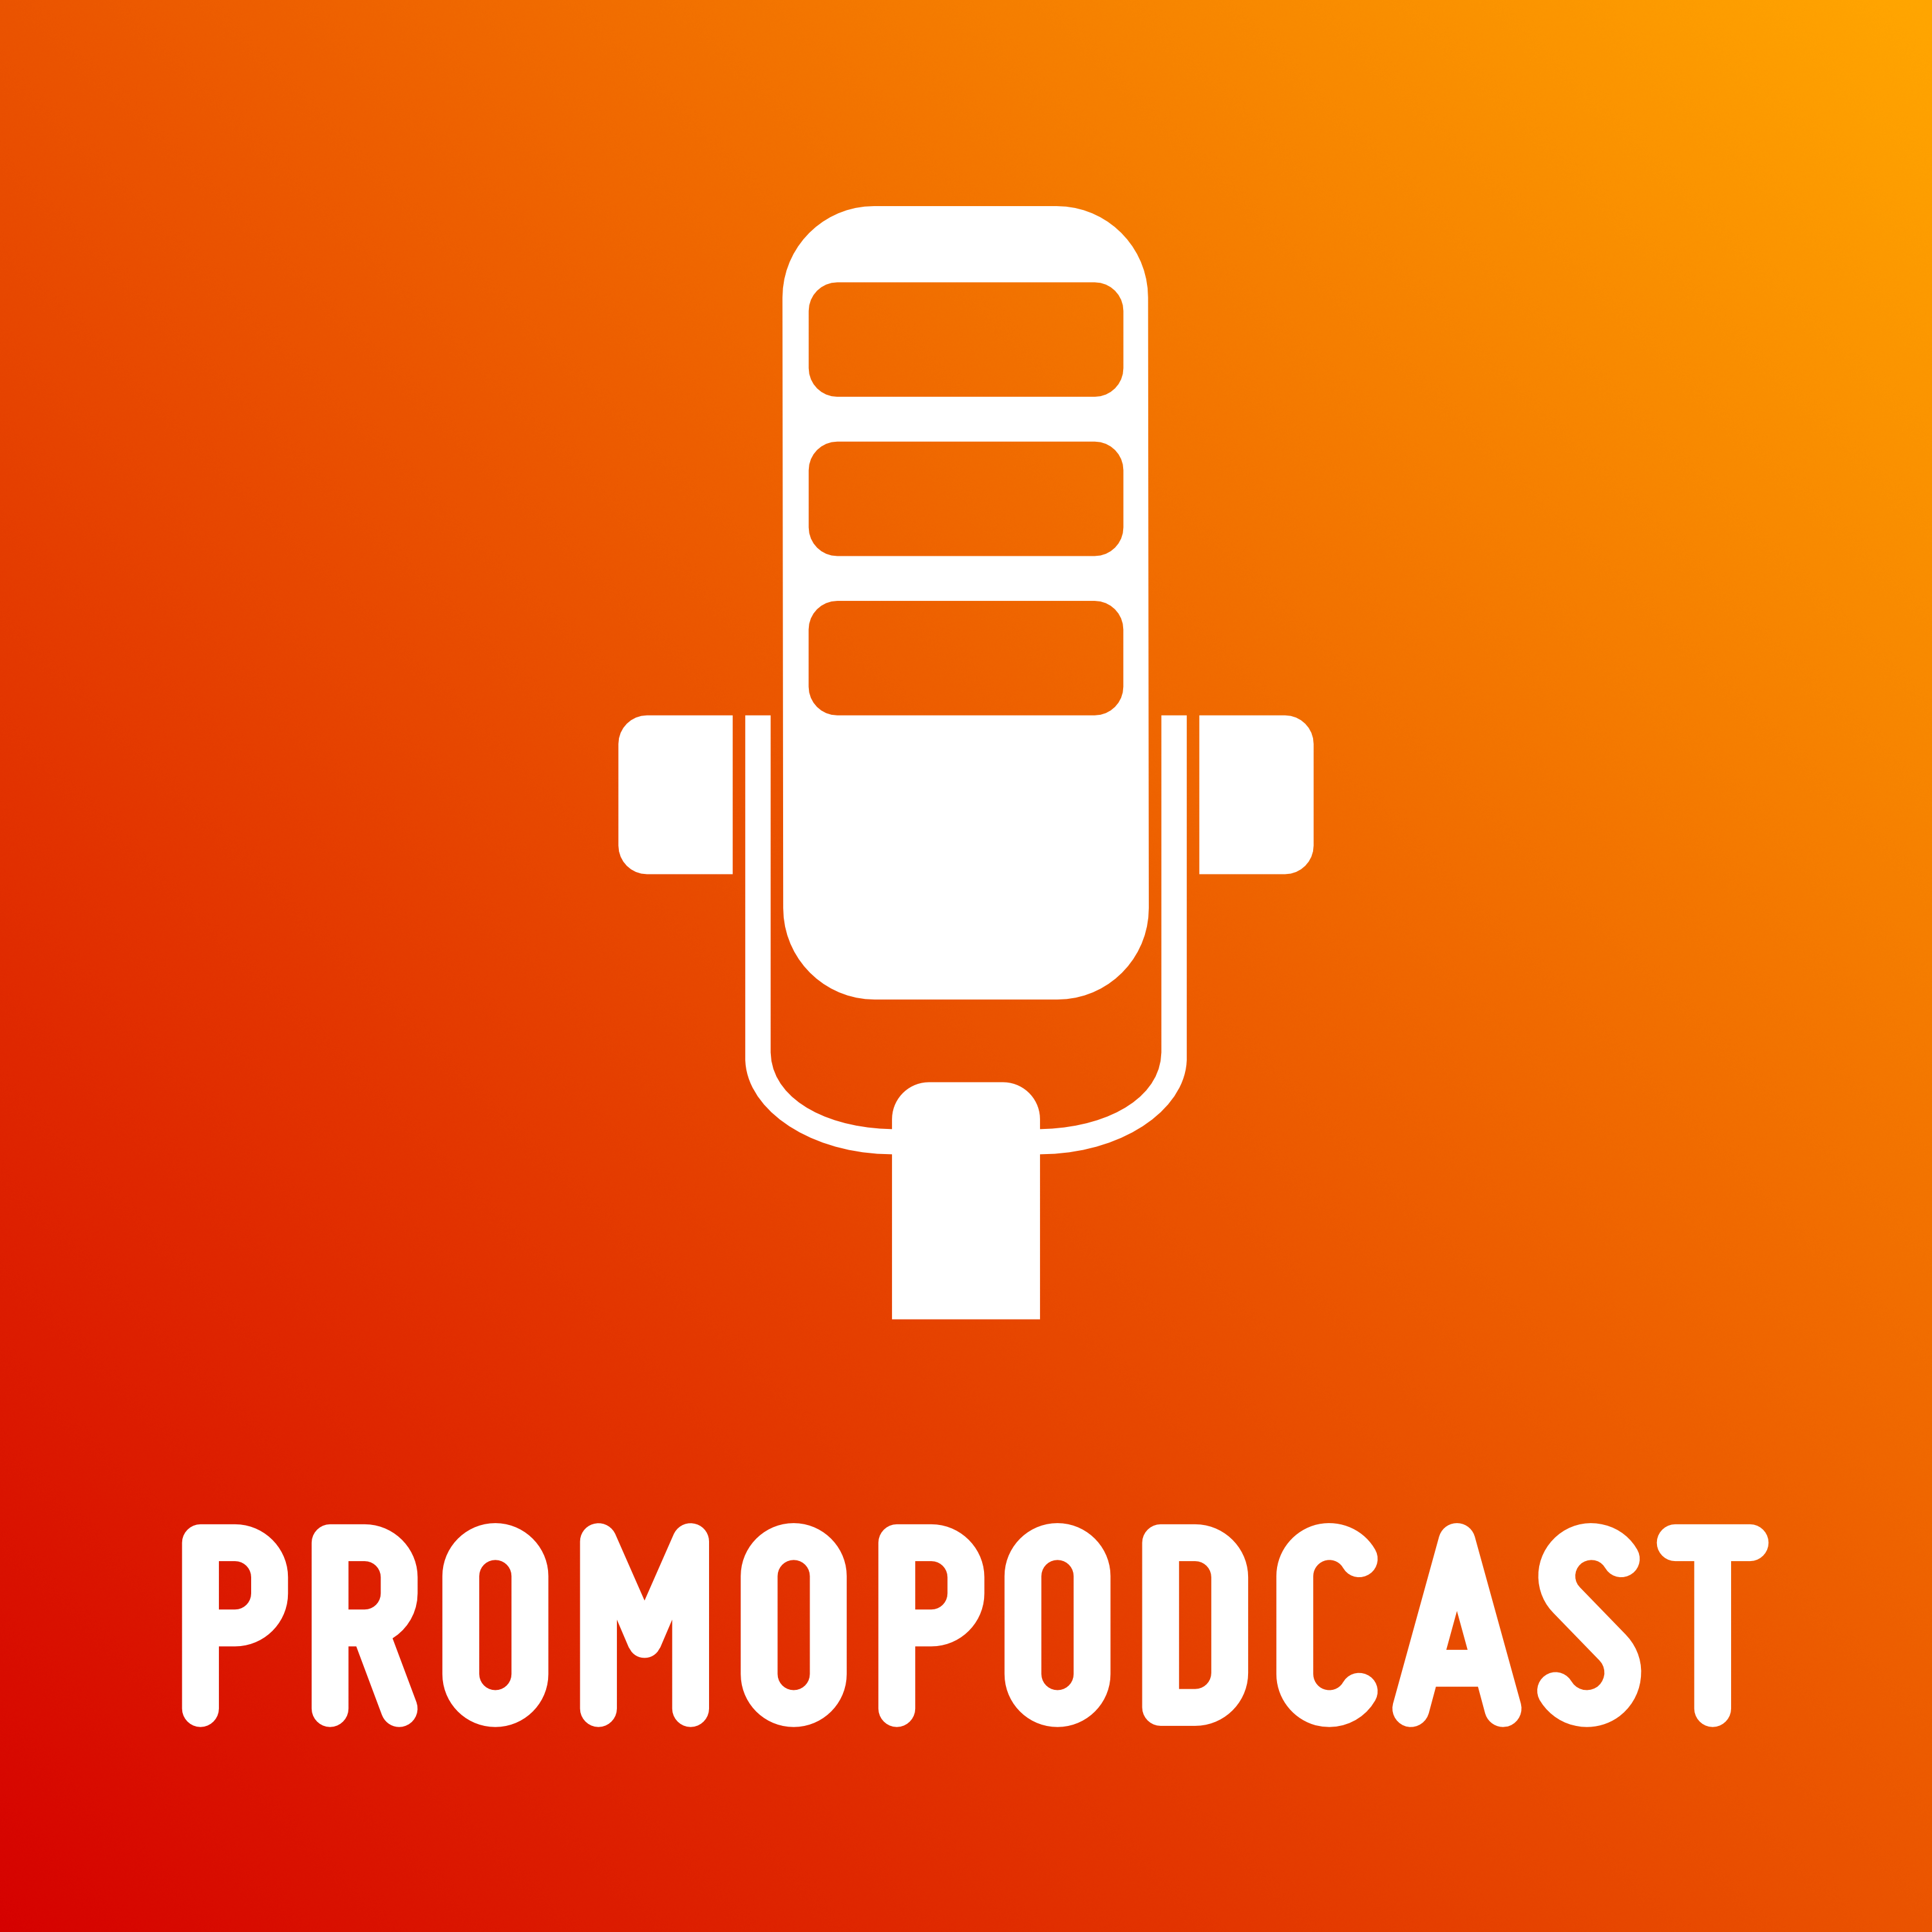 Promopodcast